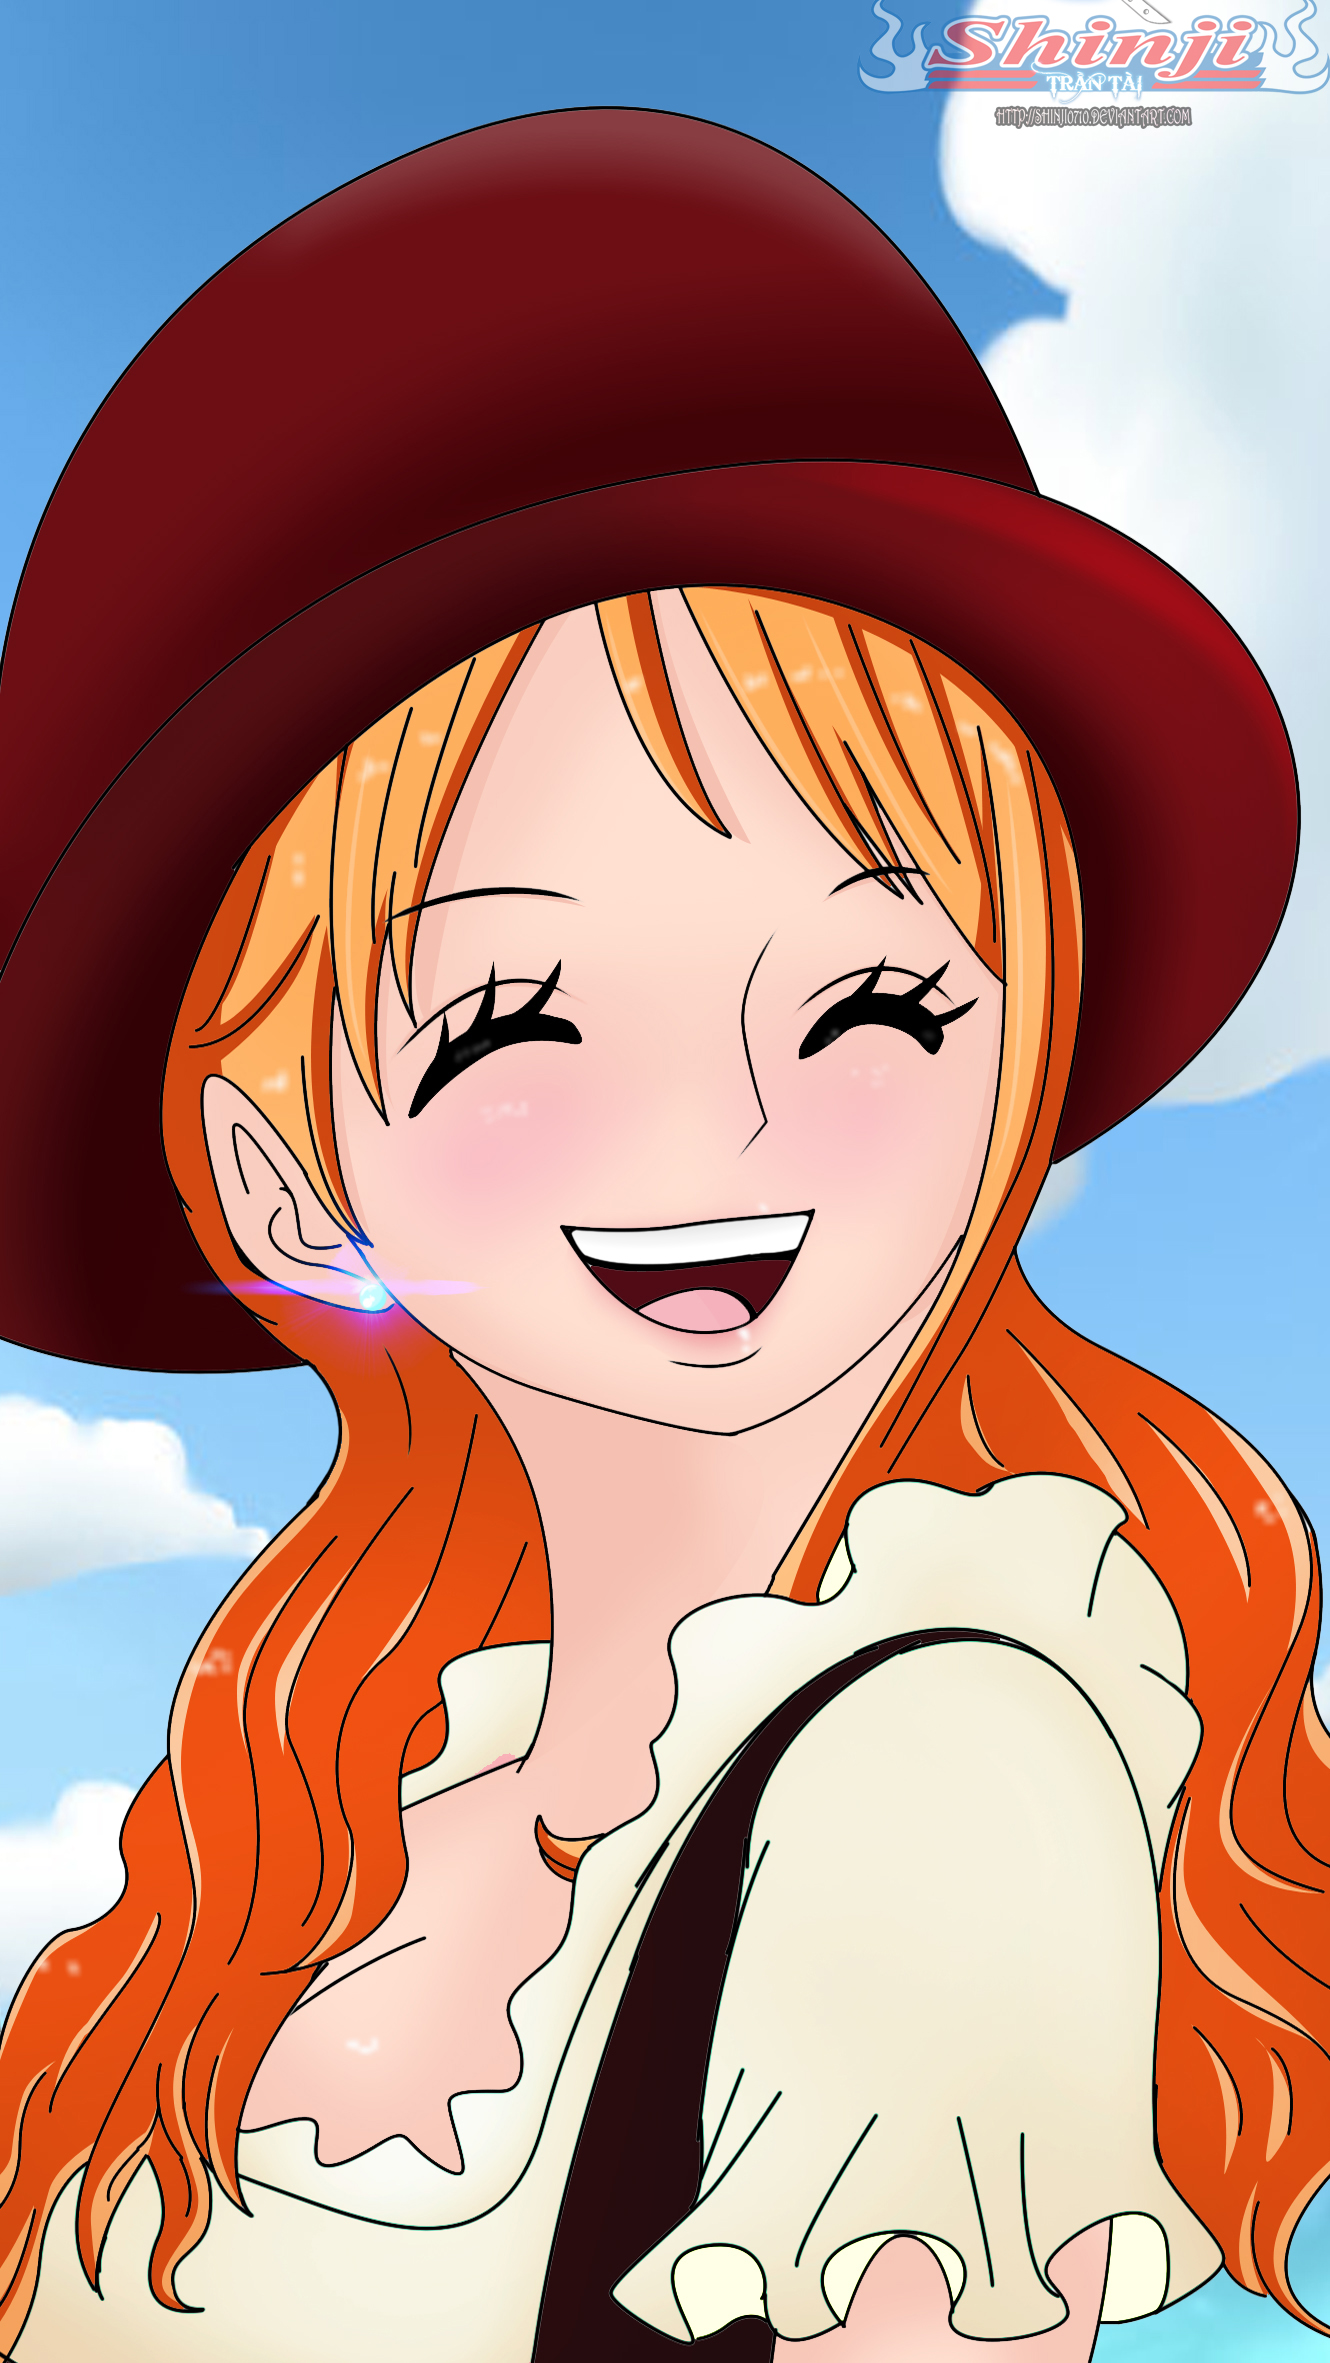 Nami One Piece Chap 7 By Shinji0710 On Deviantart